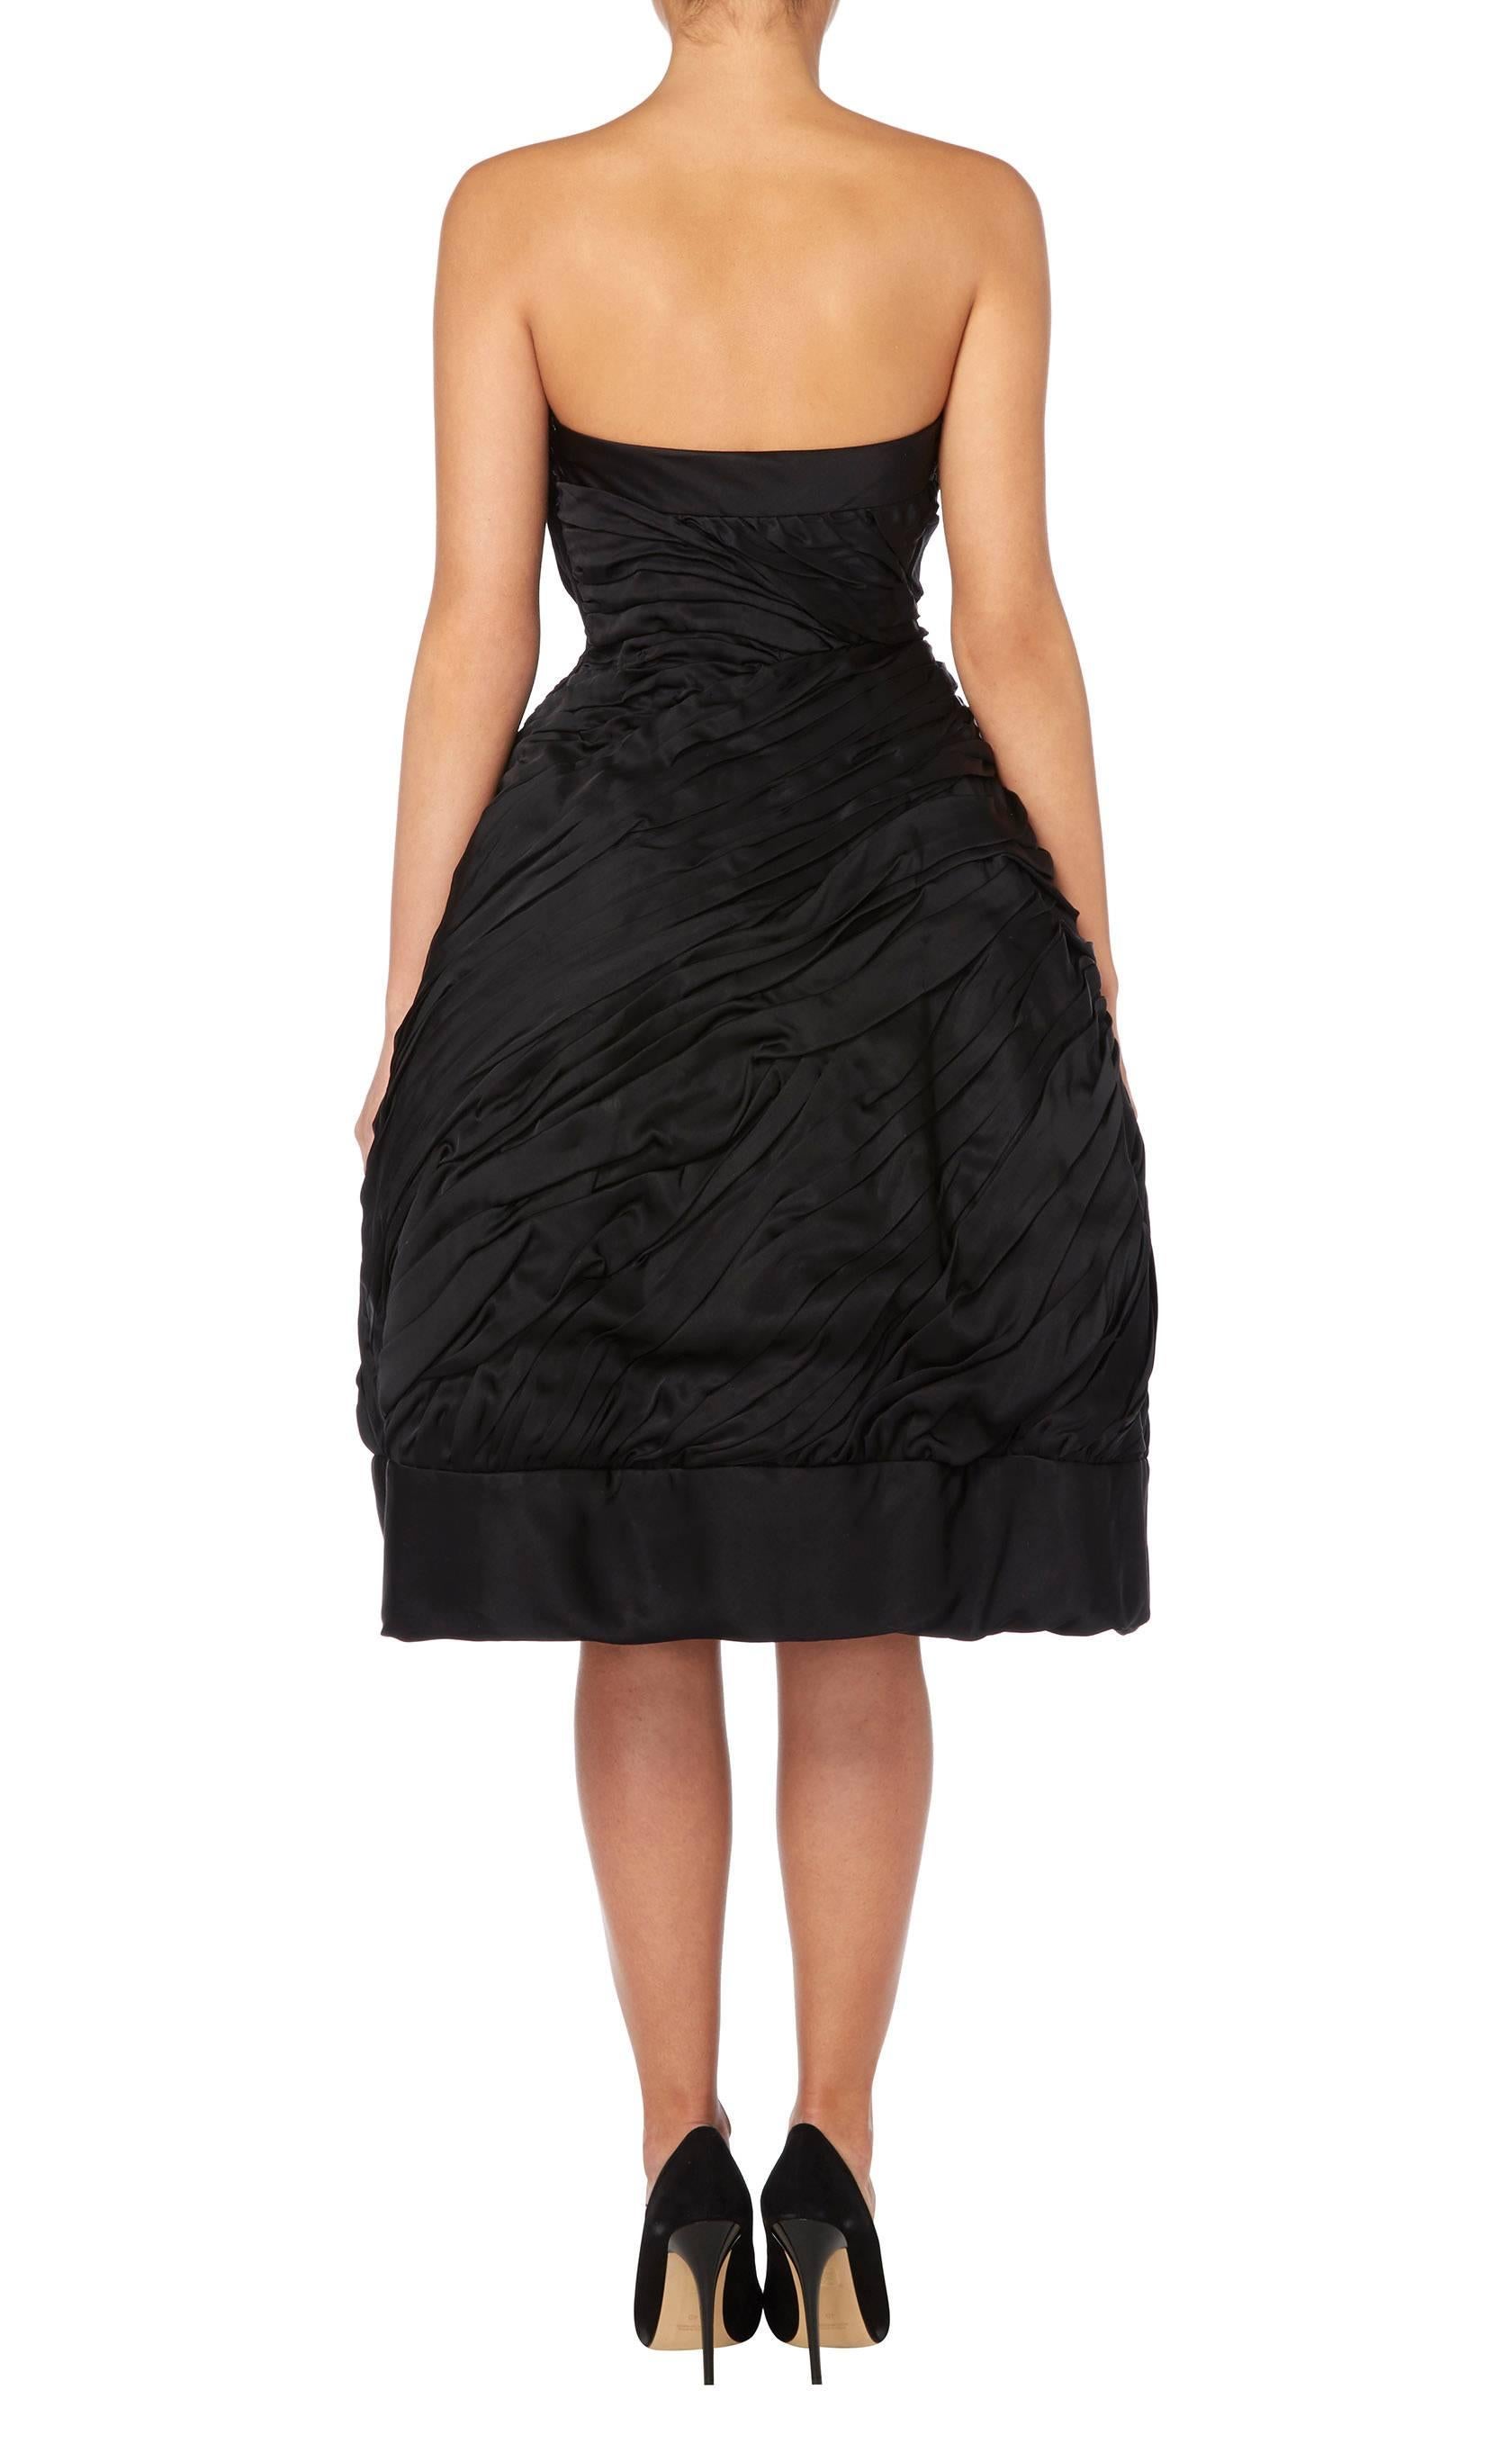 Black Helena Barbieri black dress, circa 1960 For Sale